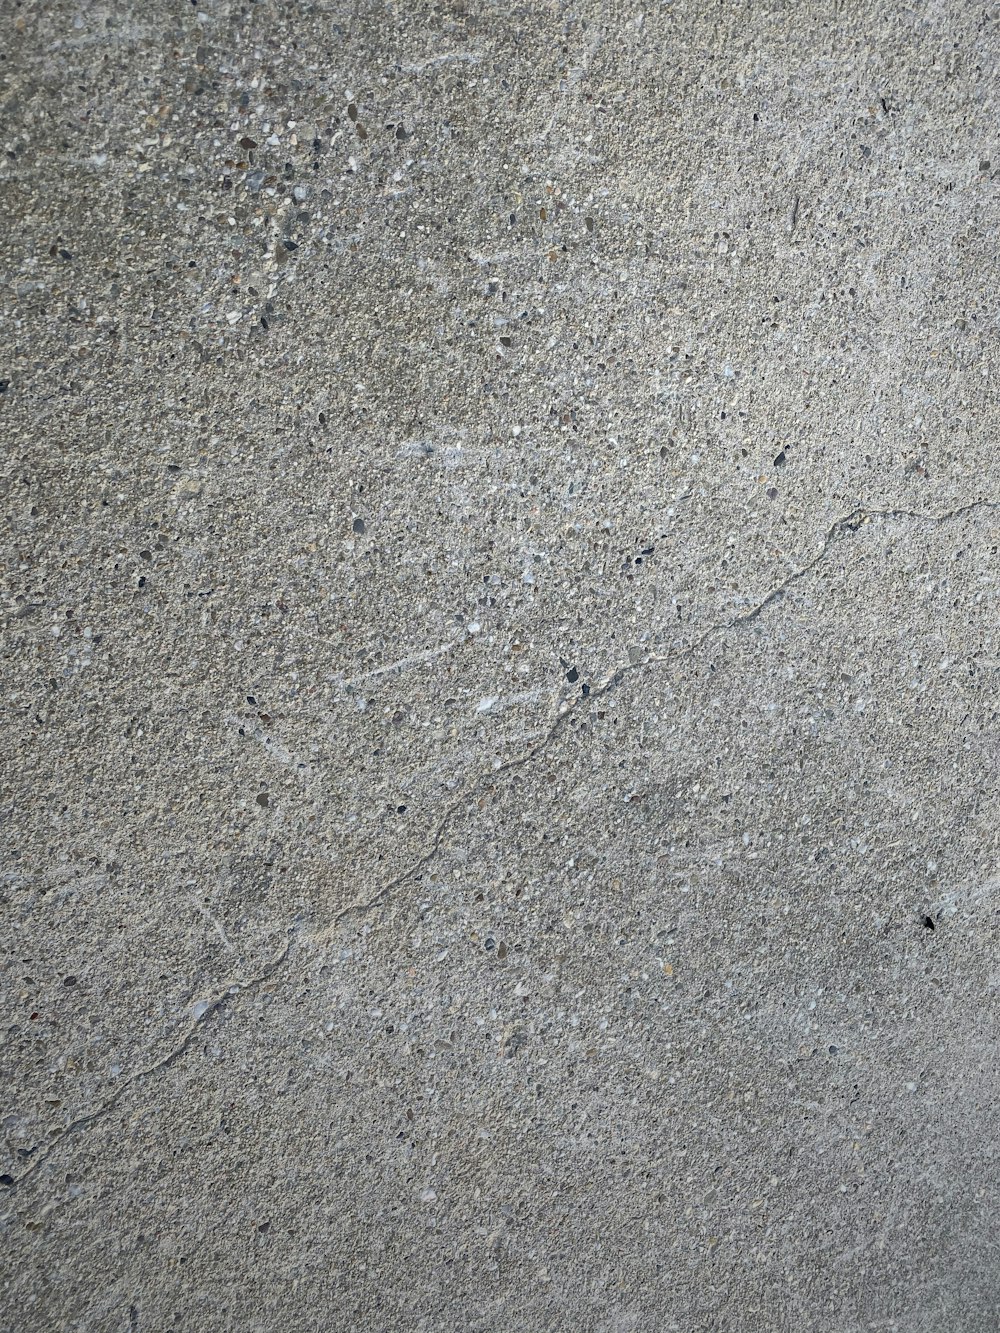 piso de concreto cinza e branco